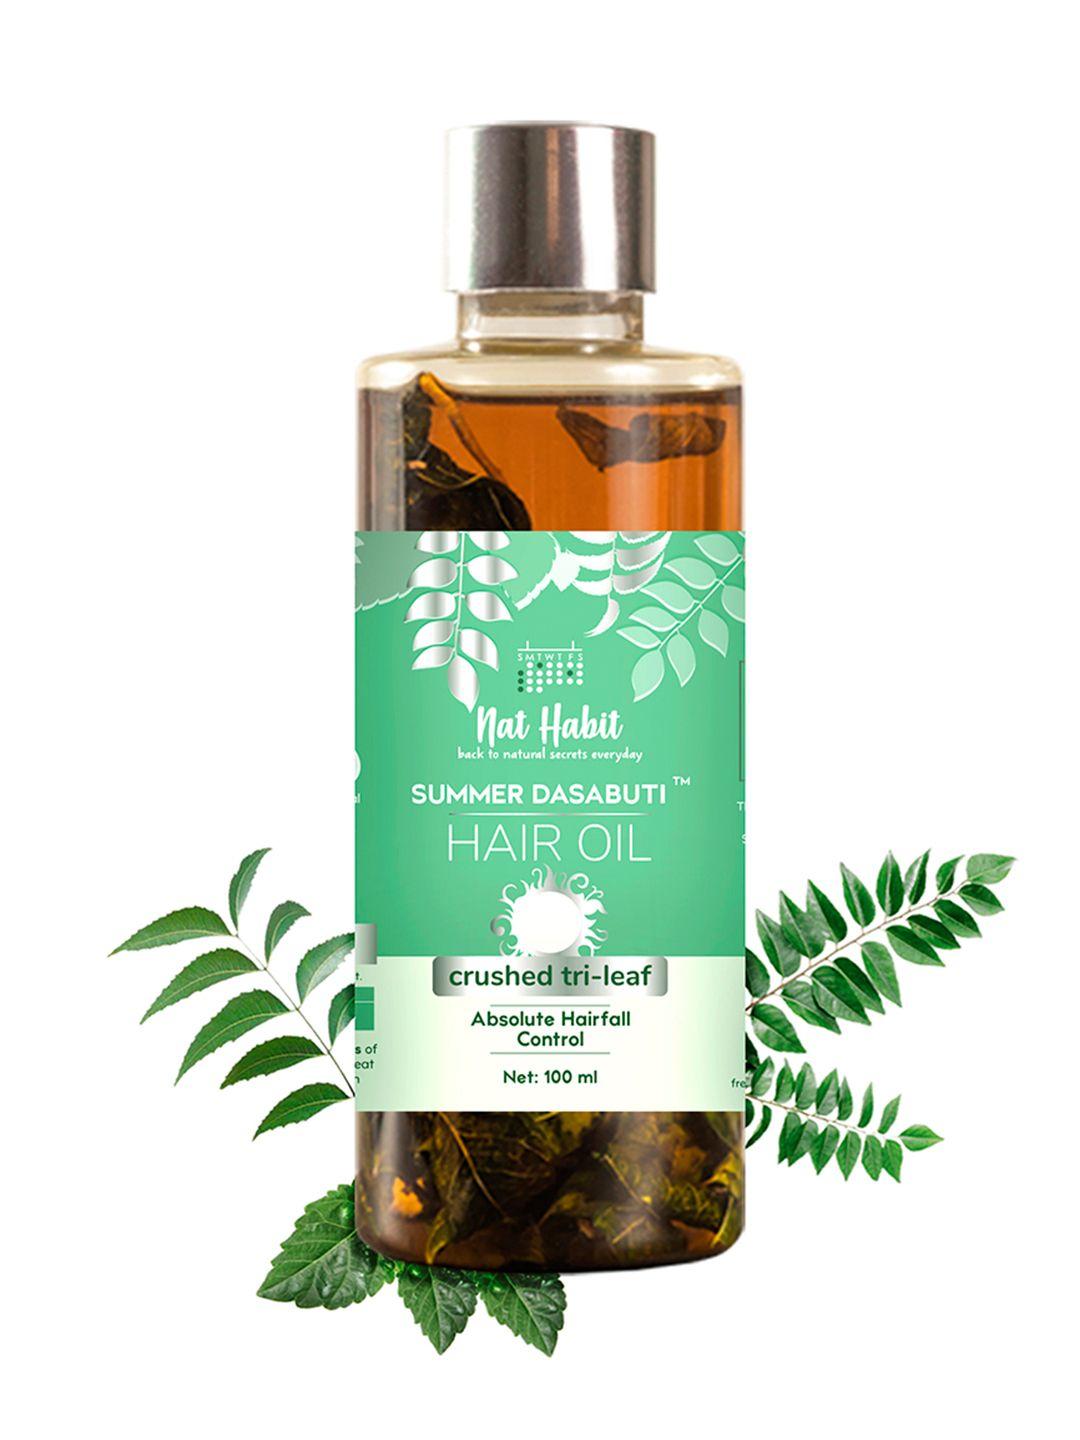 nat habit crushed tri-leaf summer dasabuti hair oil for absolute hairfall control - 100ml